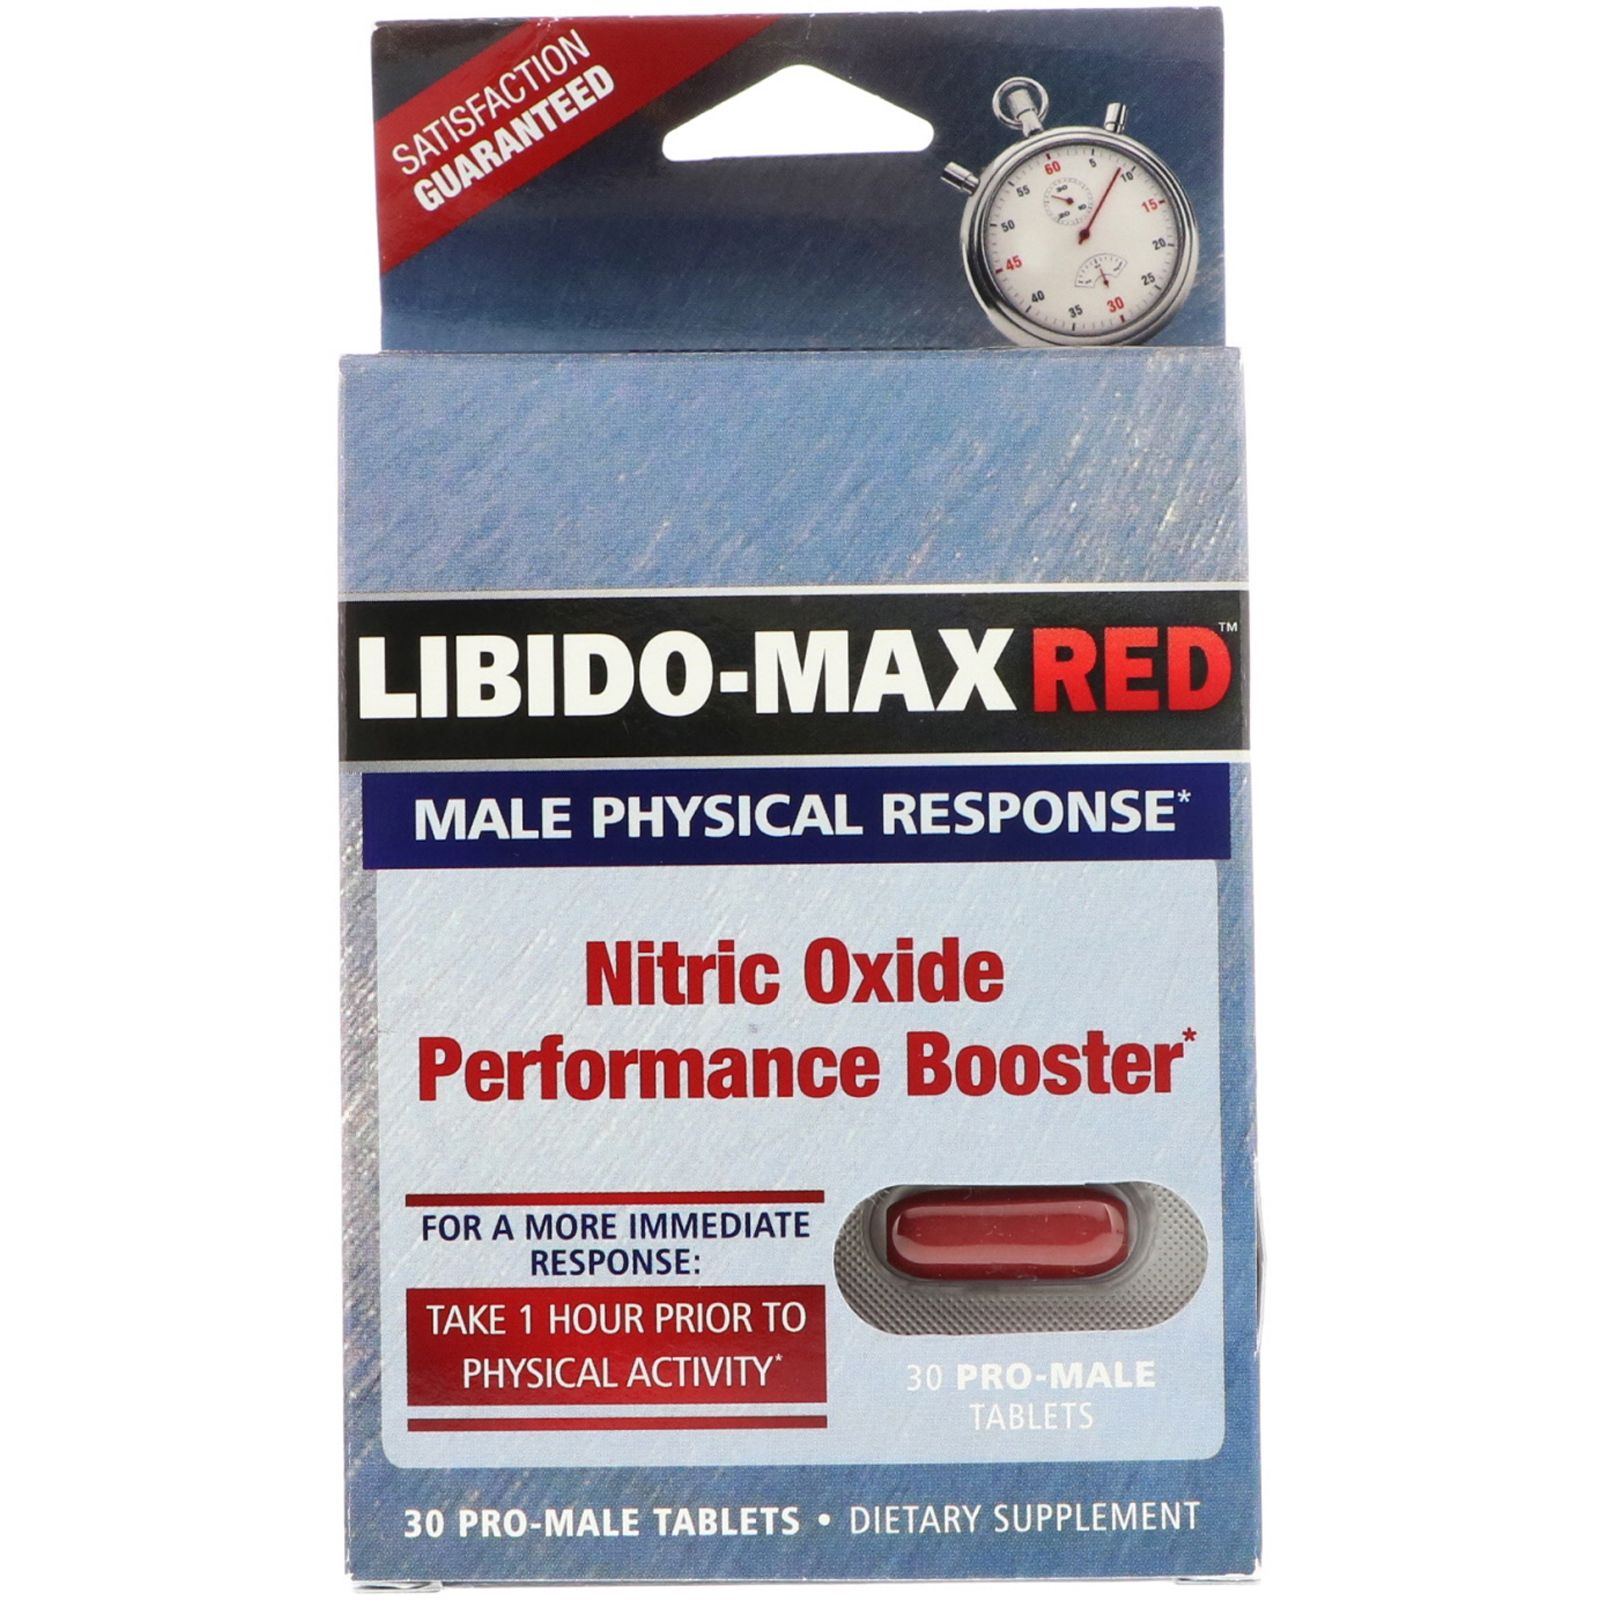 applied nutrition sample 3 упаковки по 10 грамм appliednutrition Libido-Max Red 30 Pro-Male Tablets